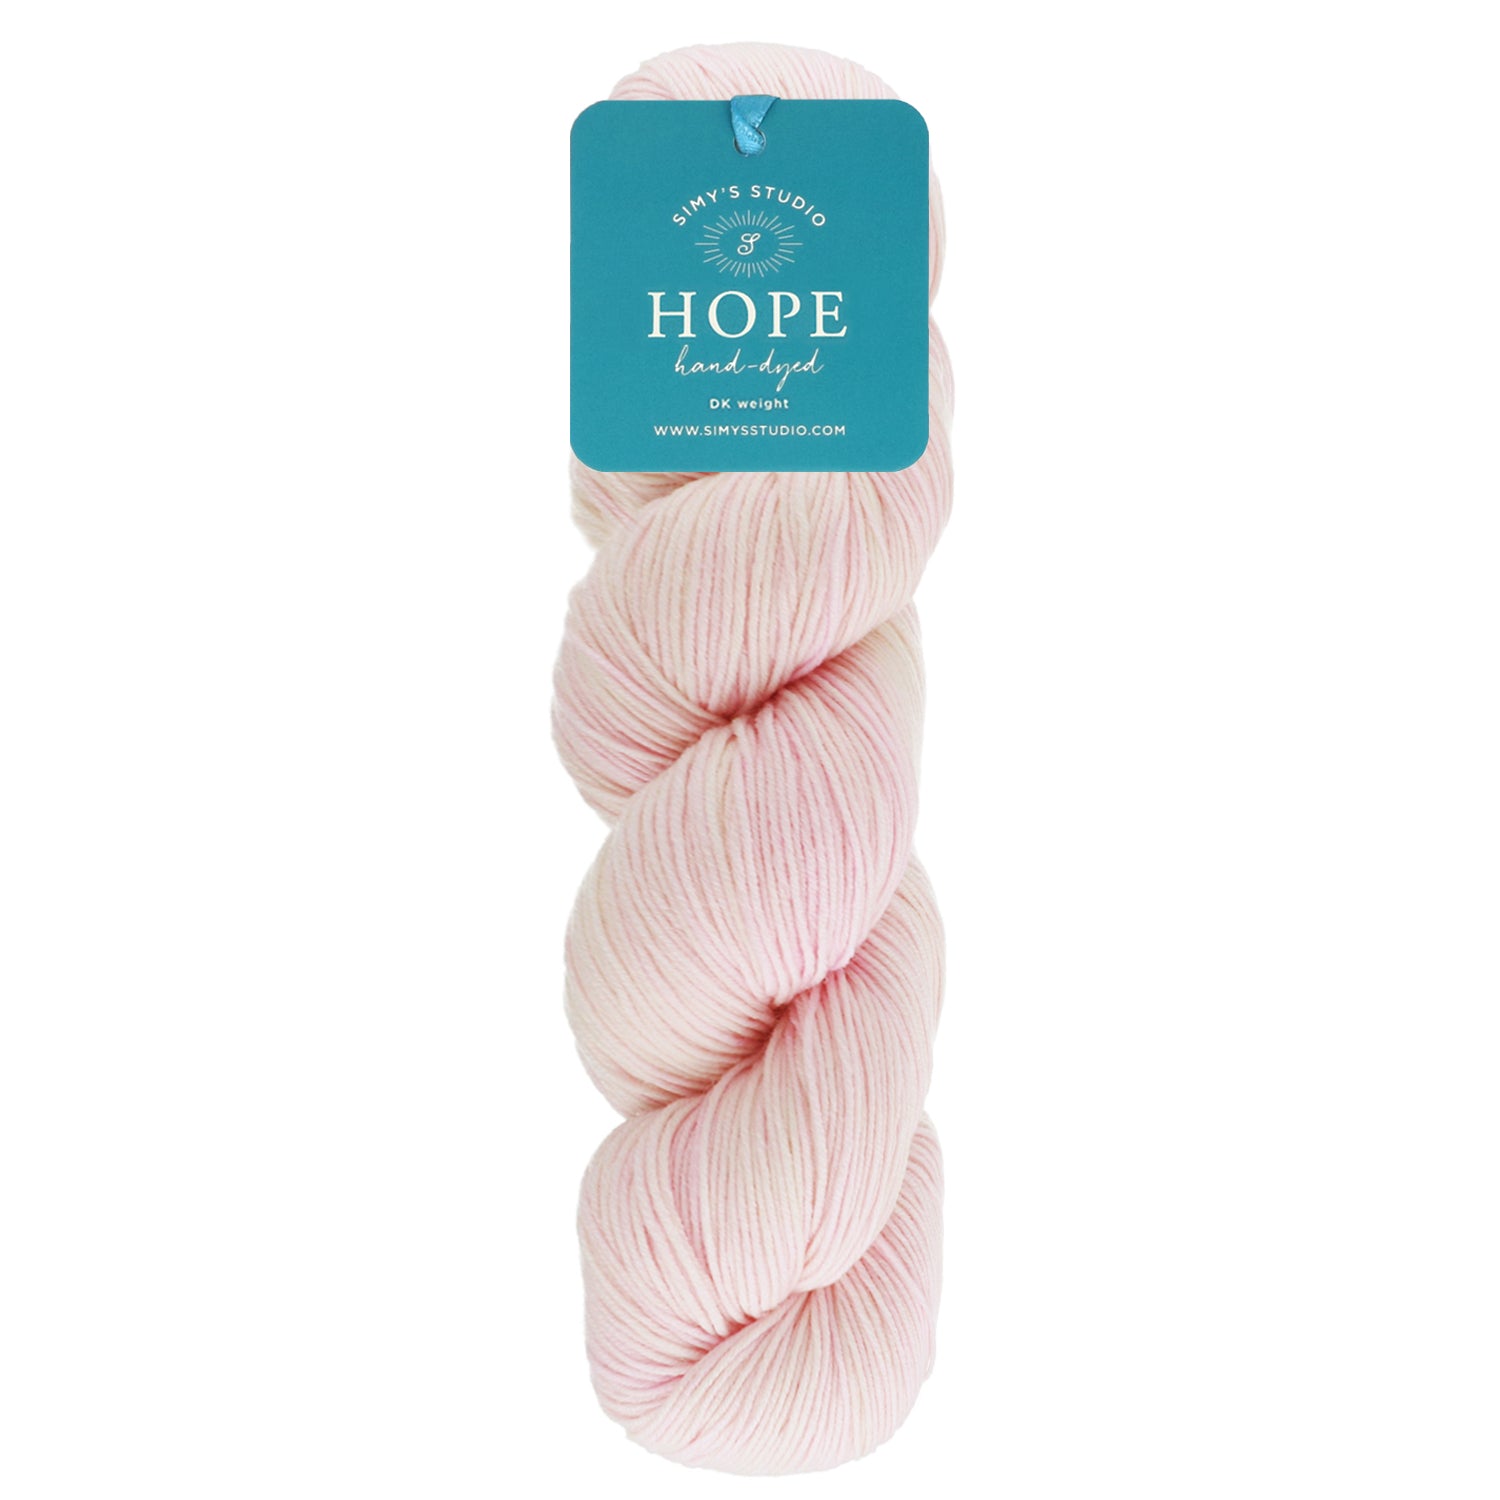  Light Pink Hand Knitting Yarn 30g Baby Knit Wool Yarn